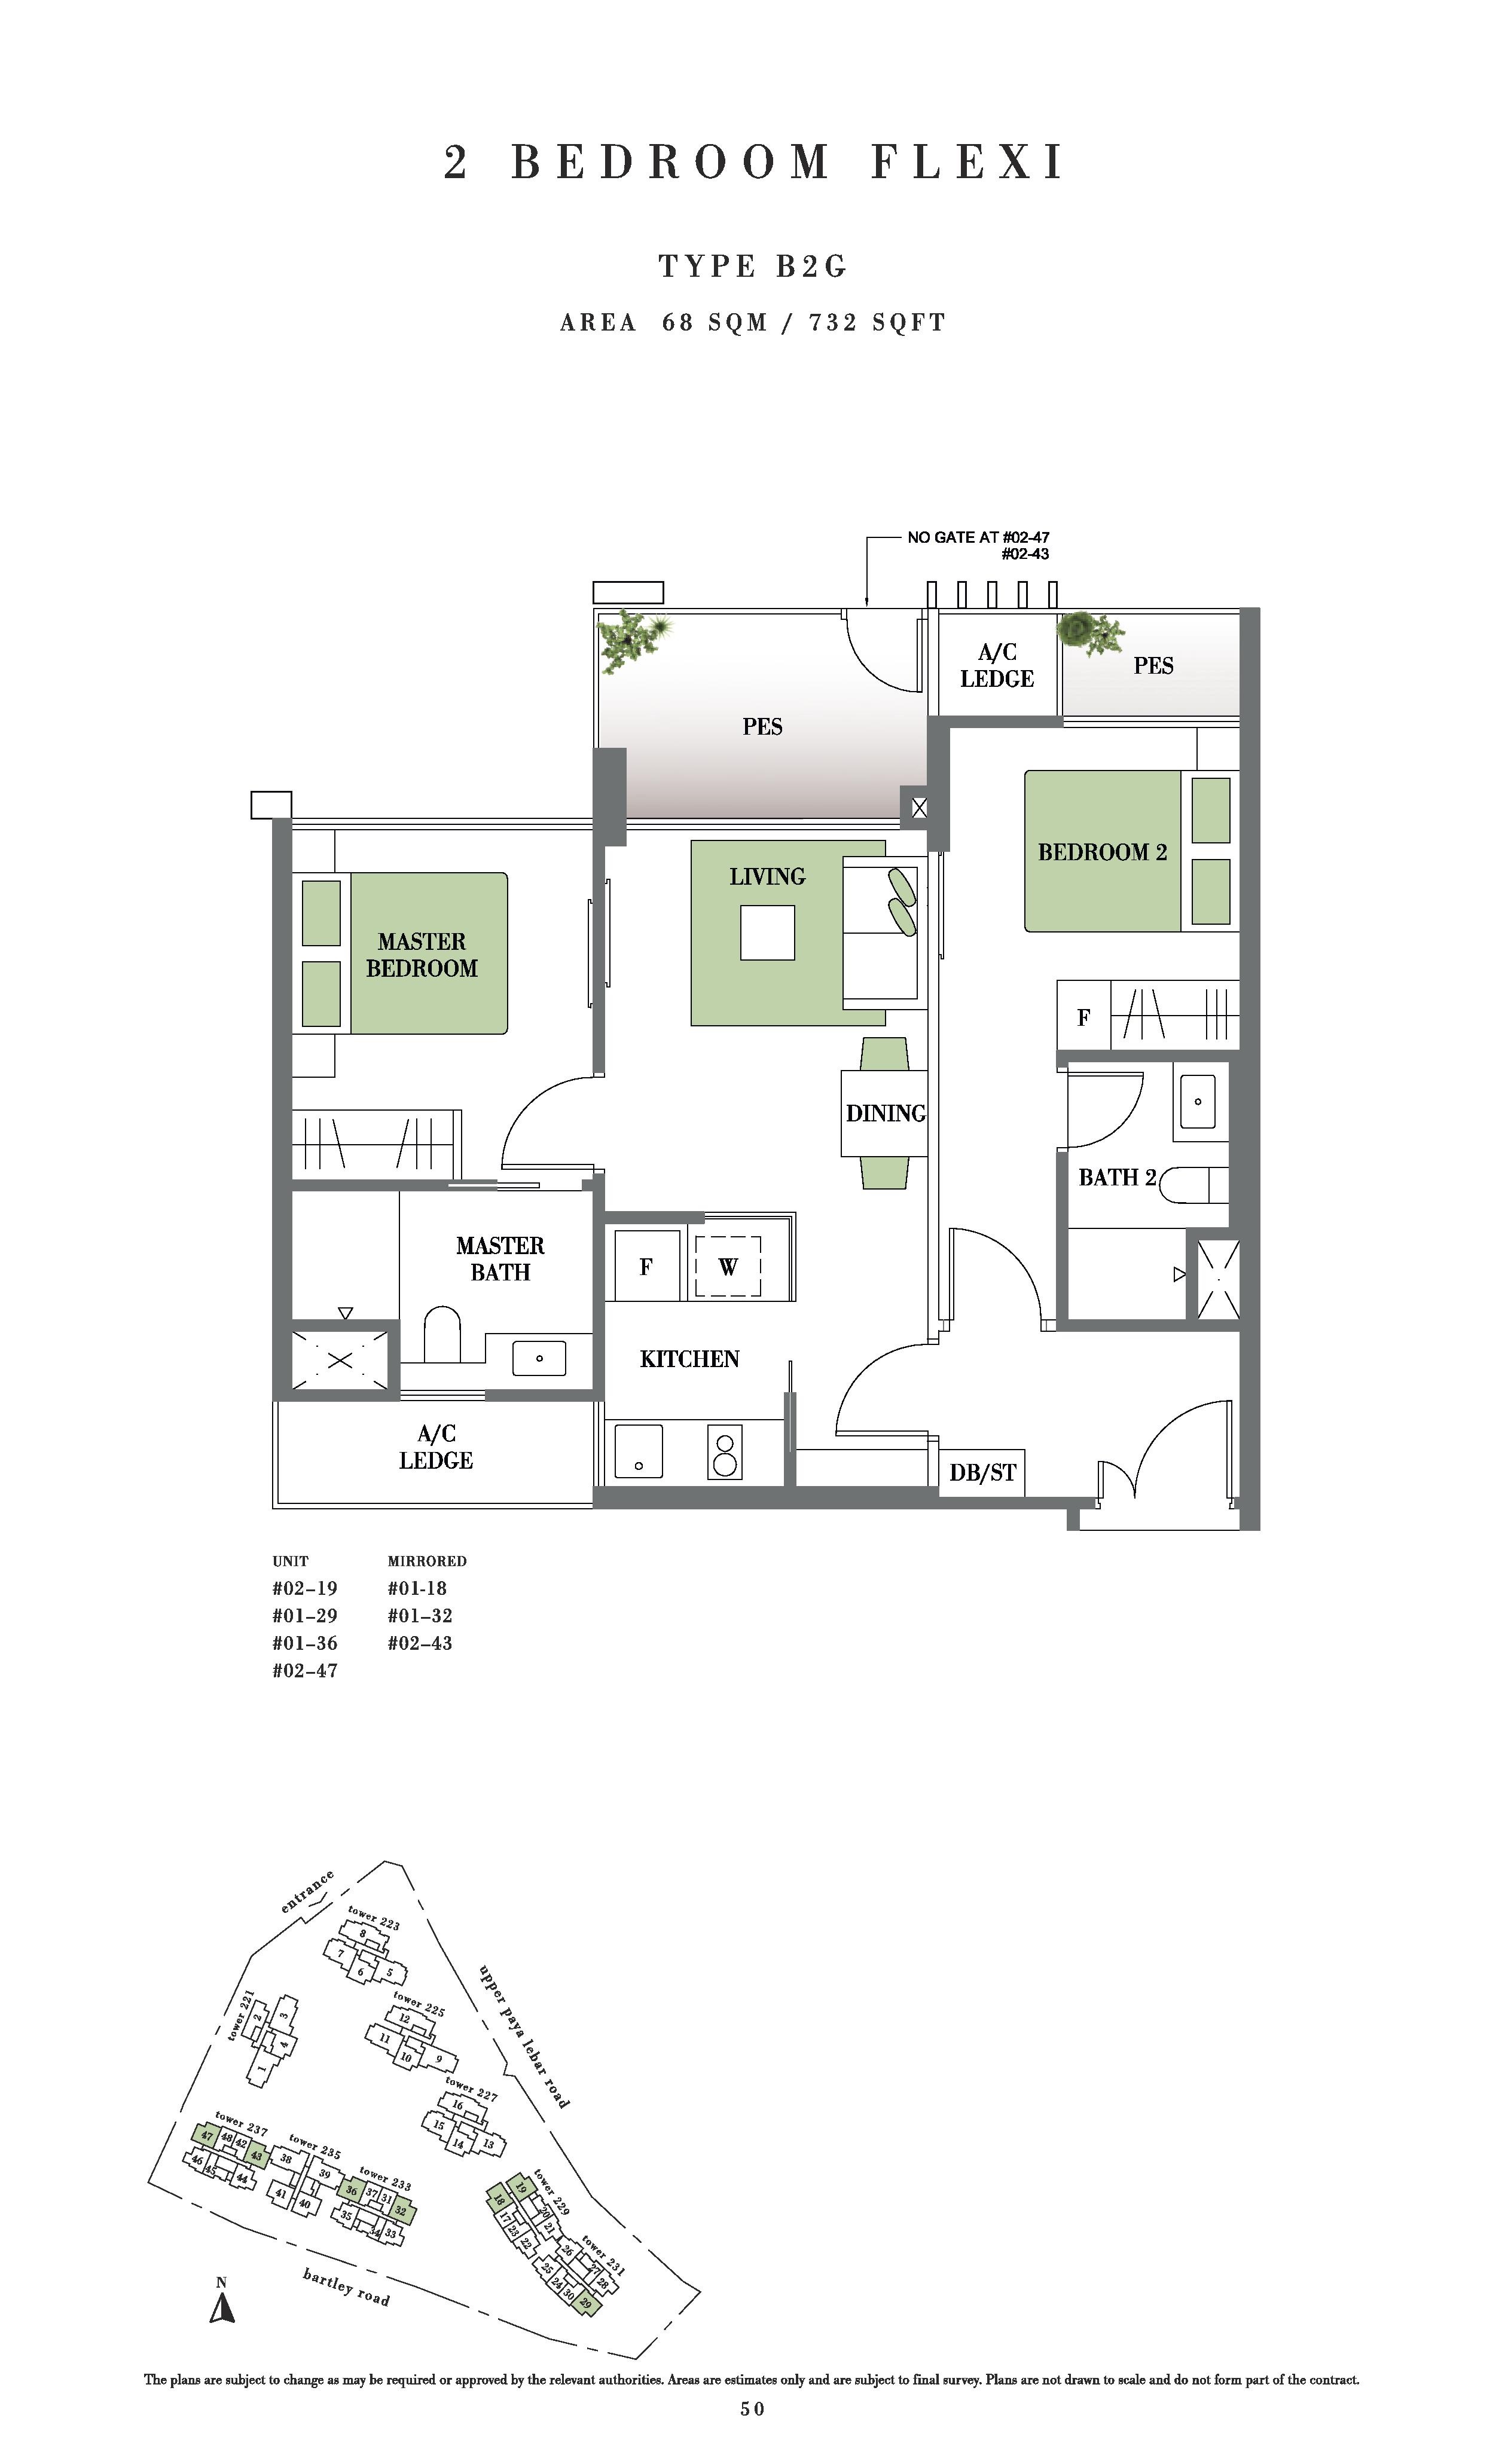 Botanique @ Bartley 2 Bedroom Flexi PES Floor Plans Type B2G